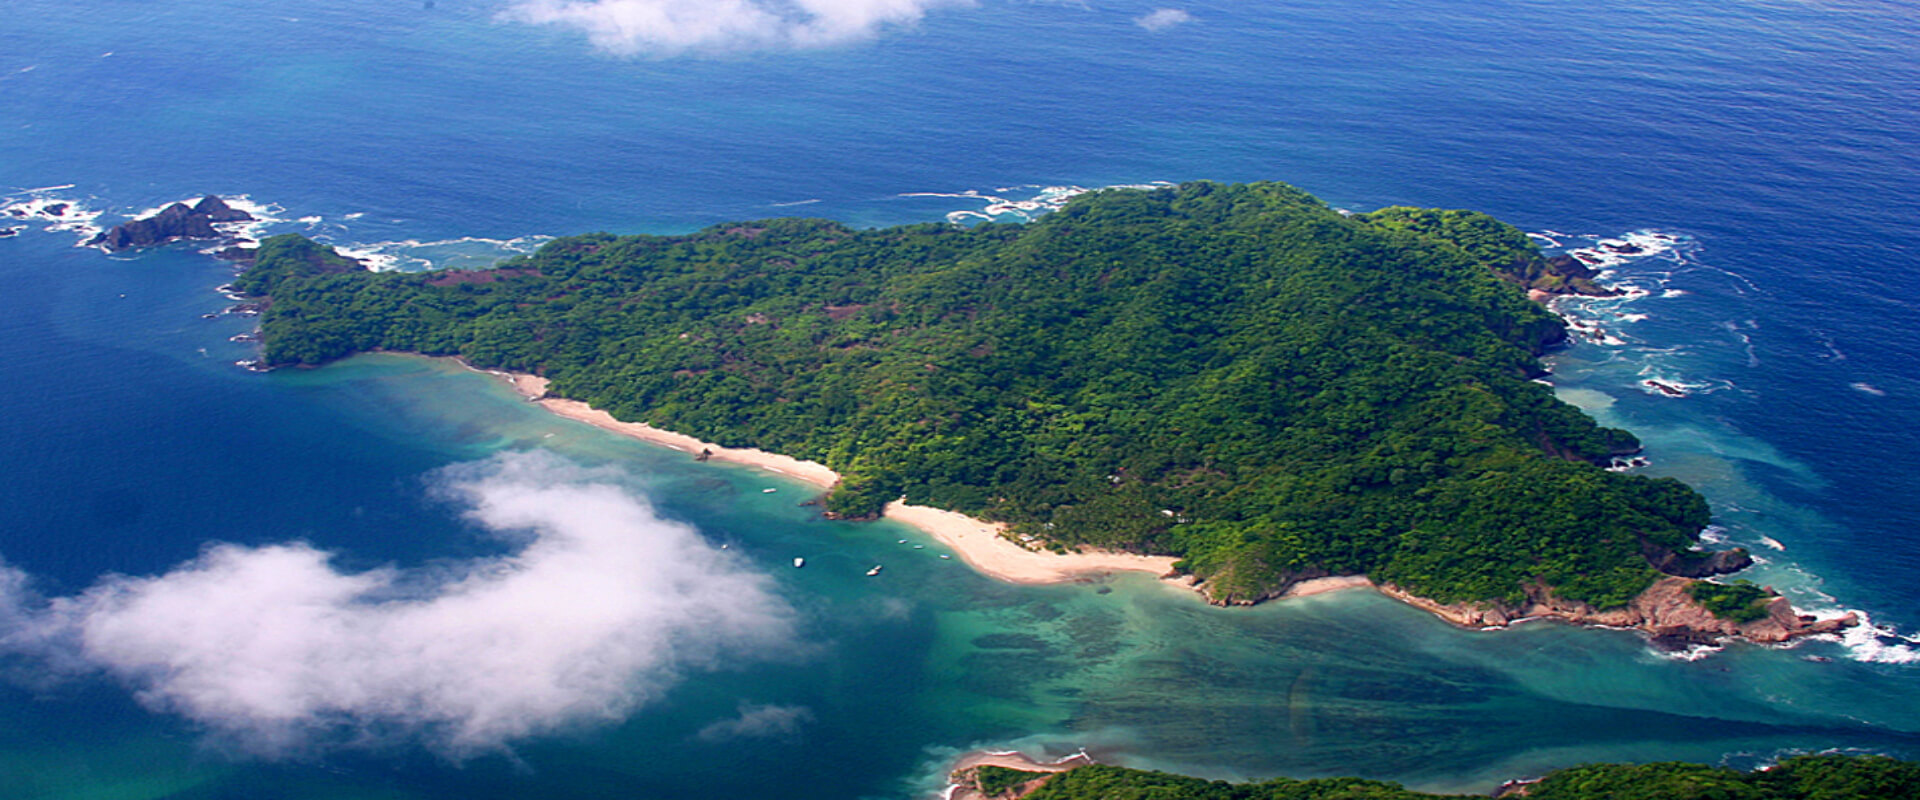 Tortuga Island Tour | Costa Rica Jade Tours